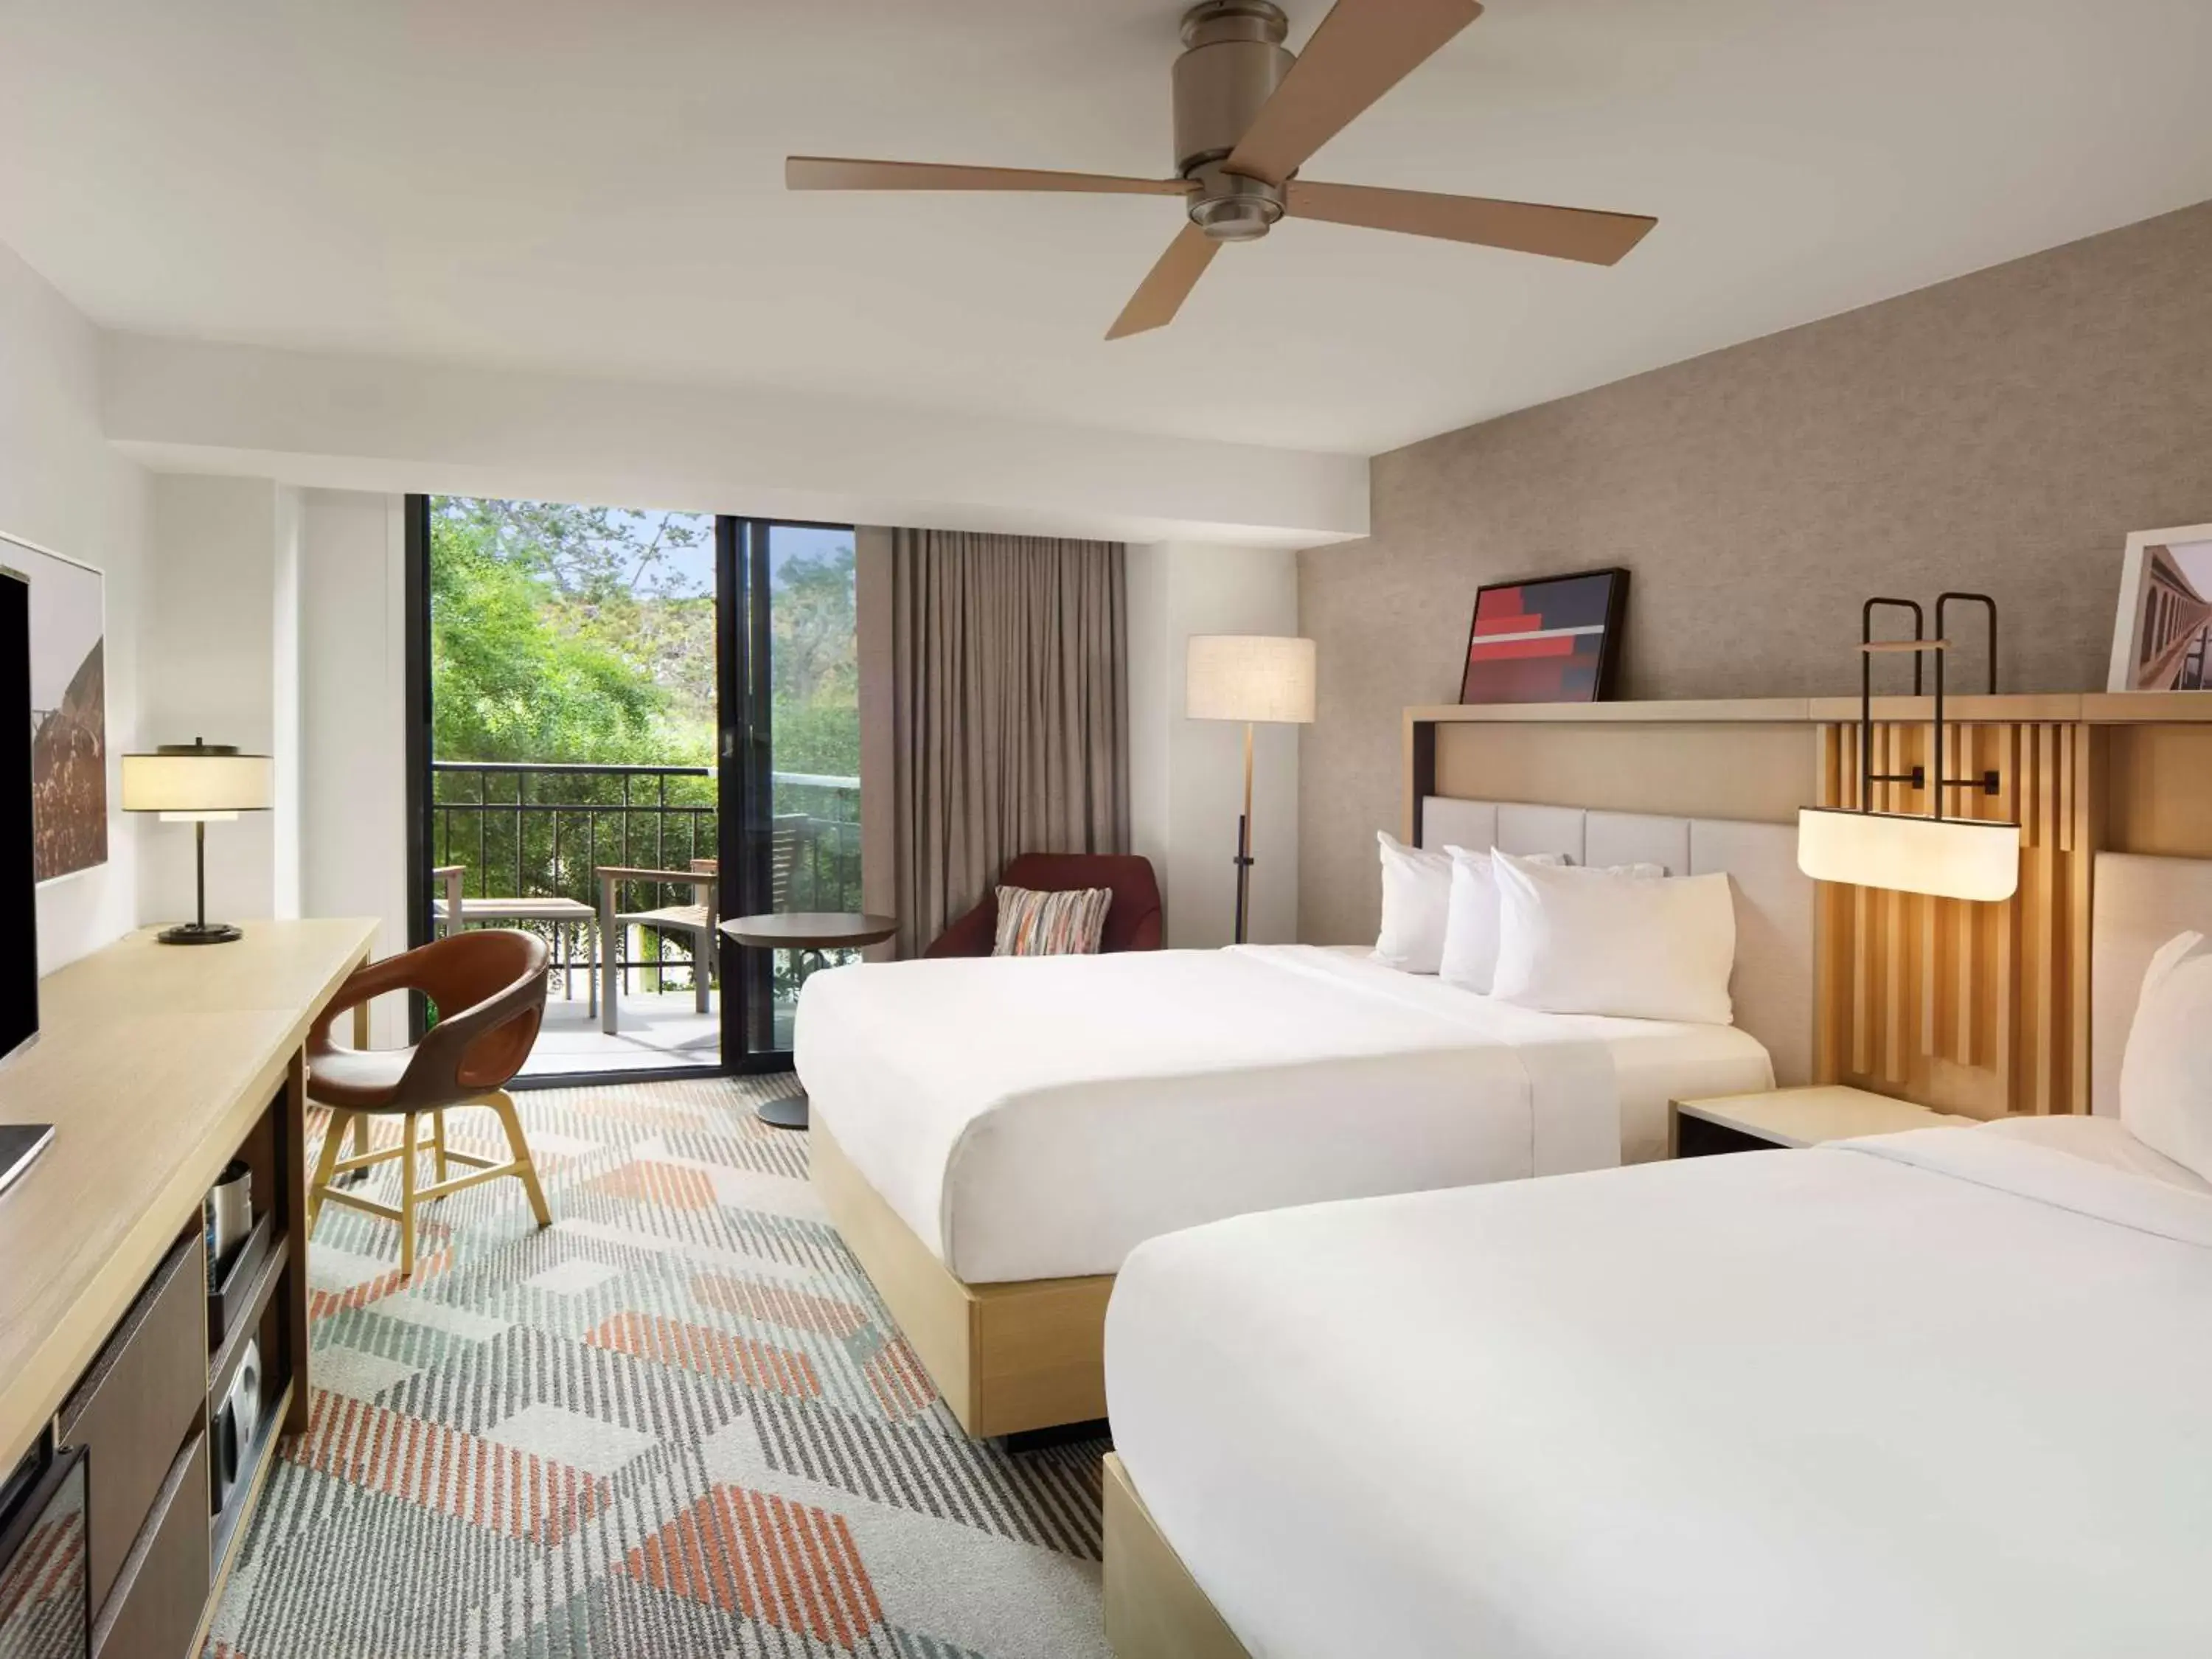 Bedroom in Hyatt Regency Monterey Hotel and Spa